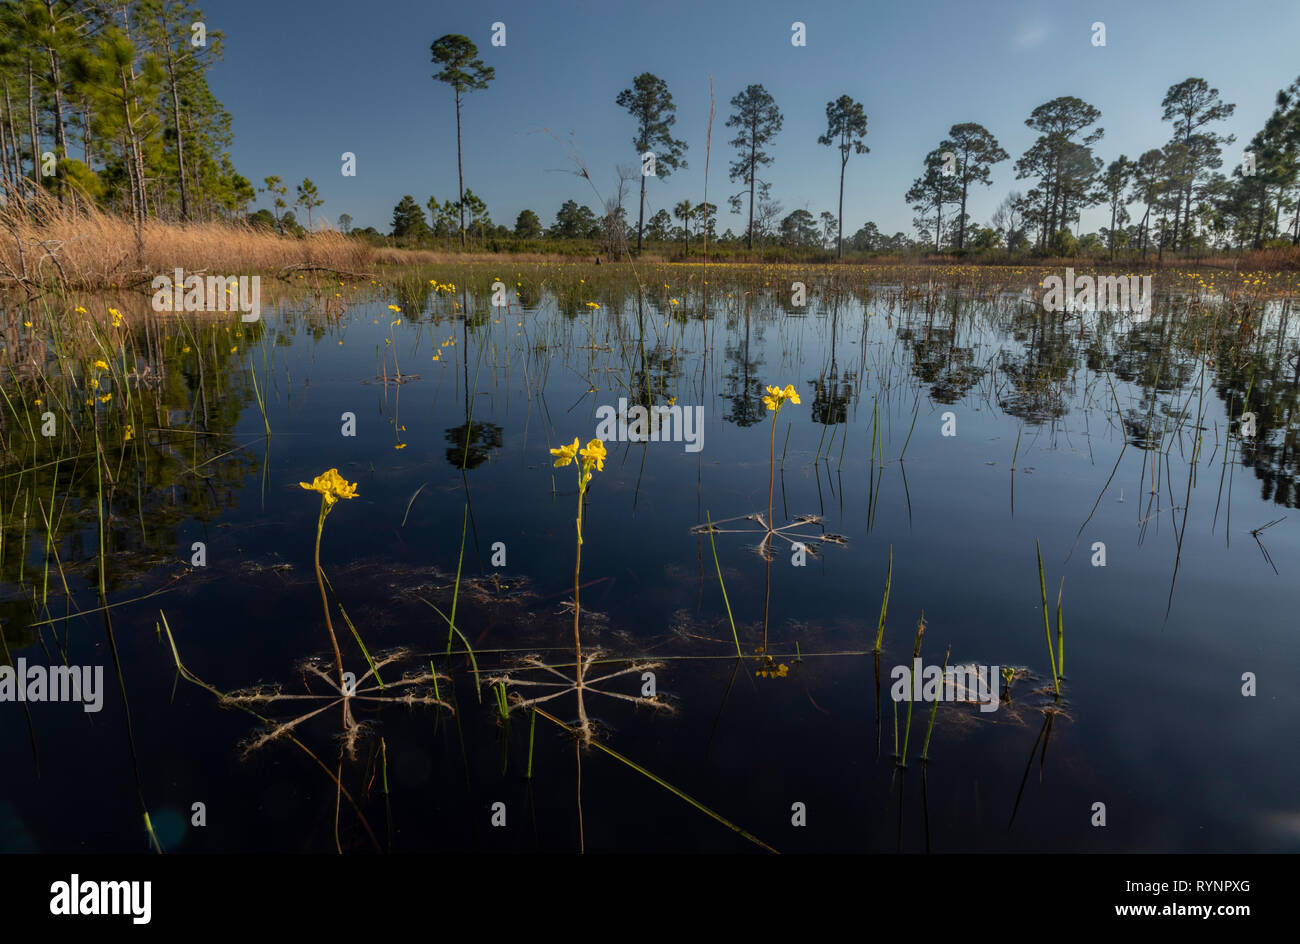 Swollen bladderwort, or large floating bladderwort, Utricularia inflata in a forest pond in Cedar Key Scrub State Reserve, Florida. Stock Photo